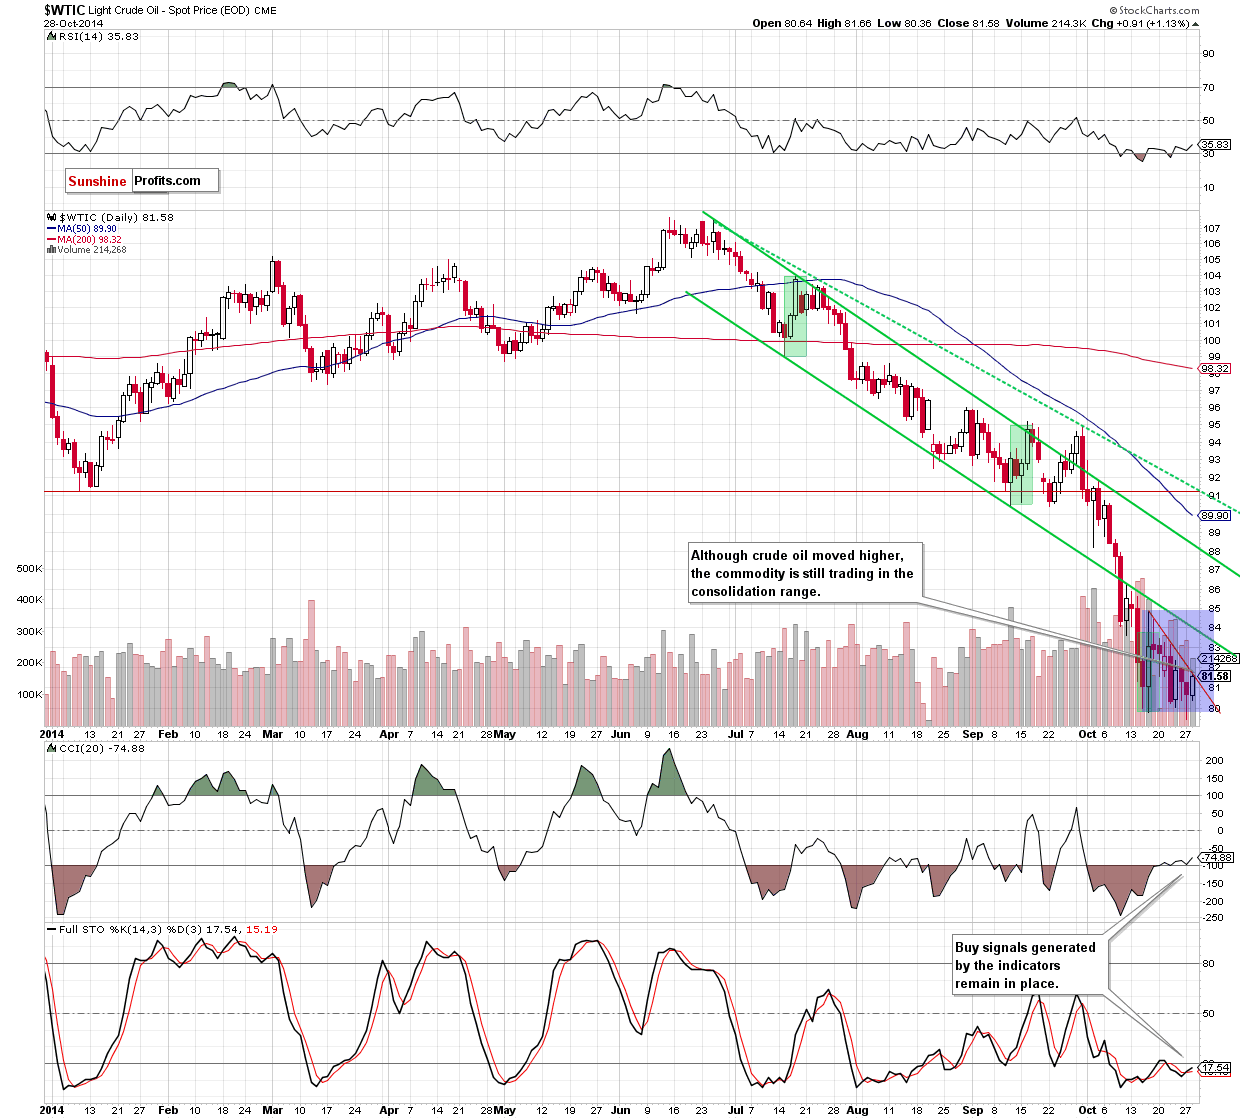 WTI Crude Oil daily chart